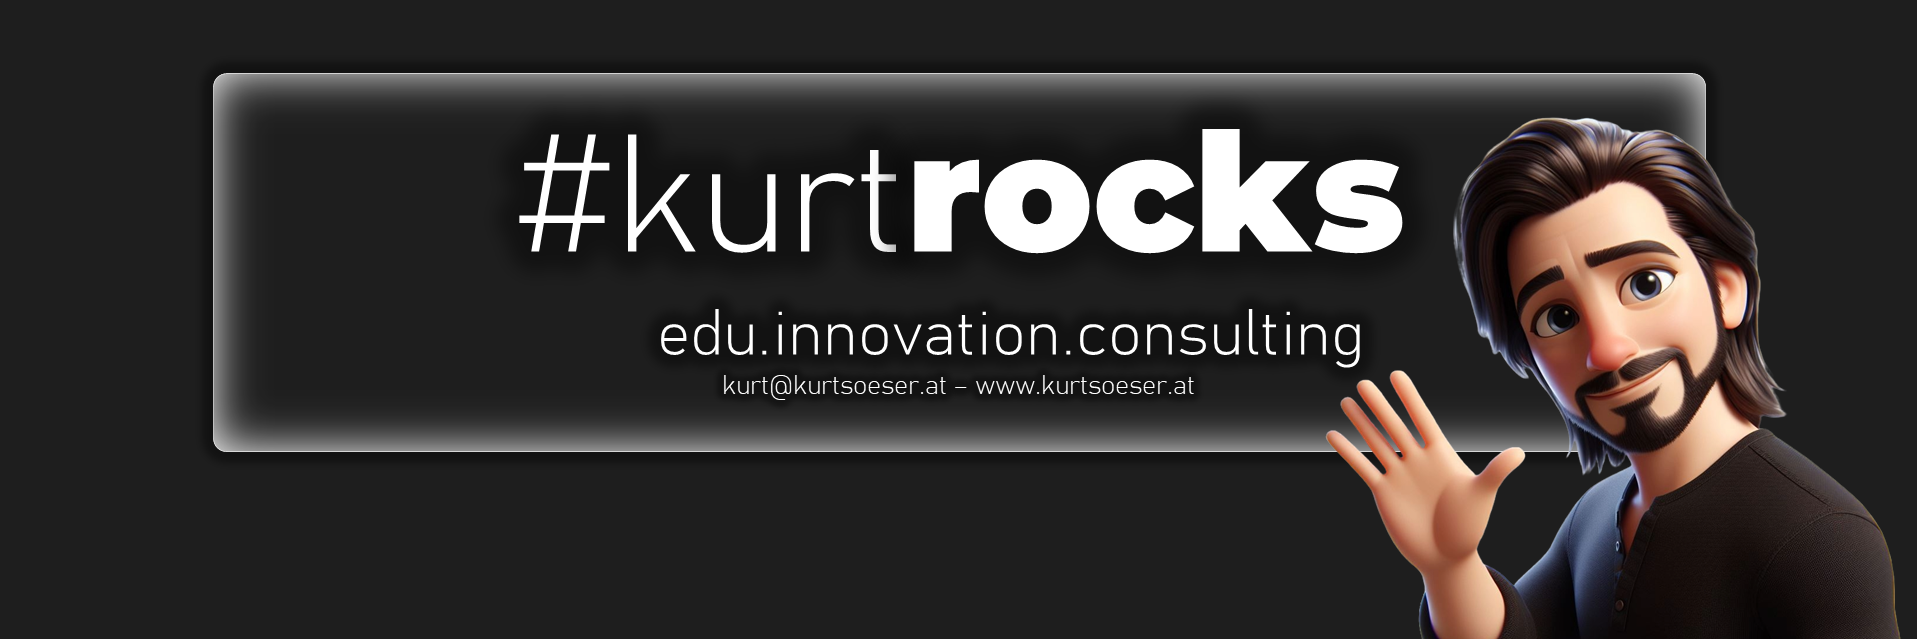 Kurt Söser – kurtrocks EDU.innovation